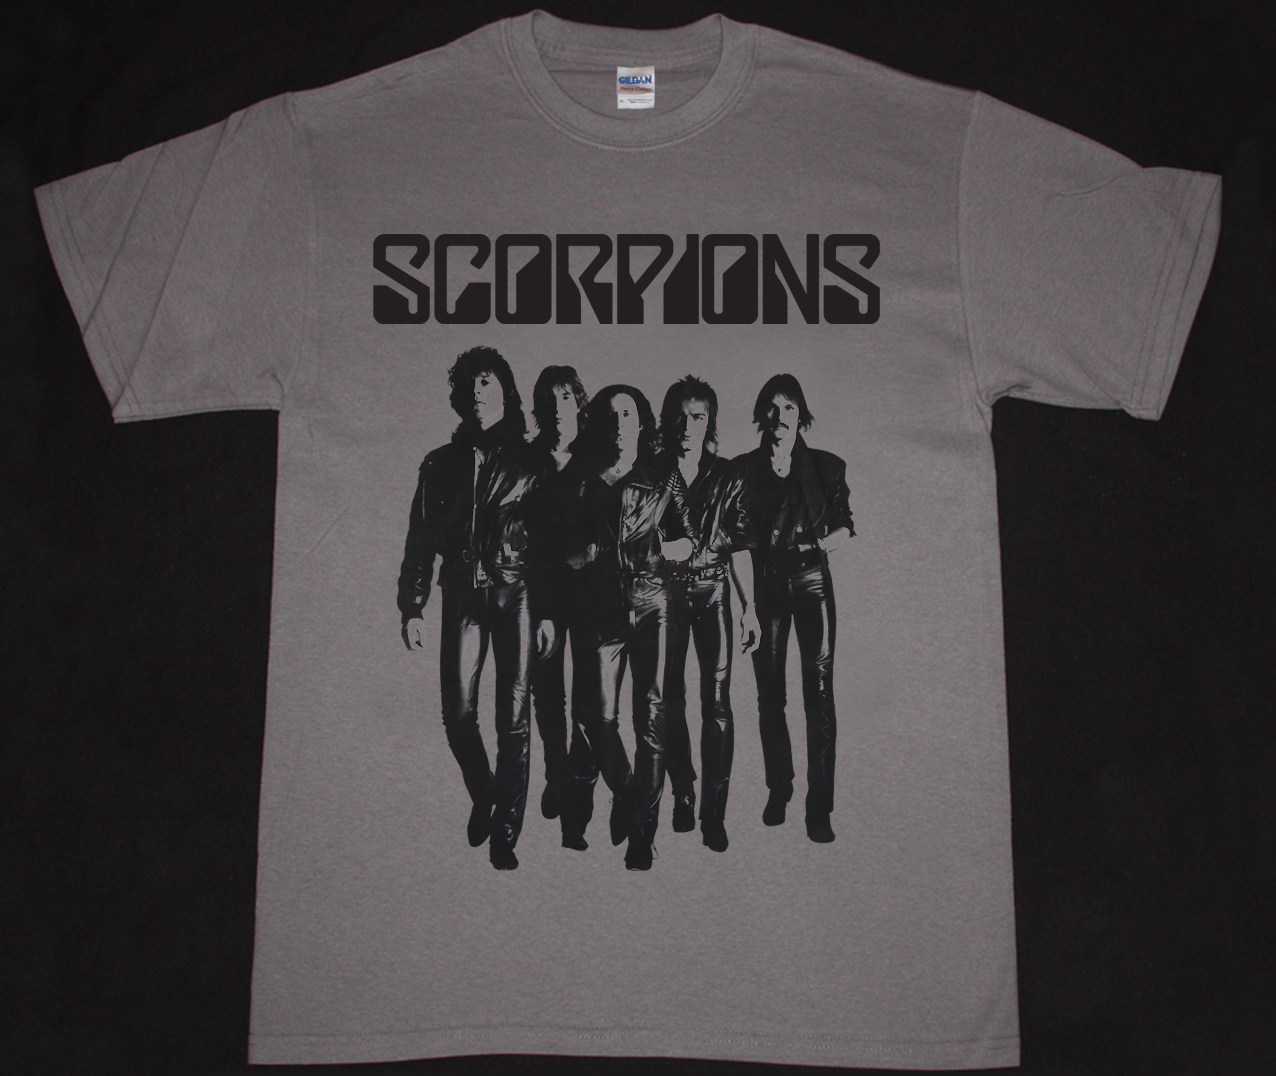 First sting. Футболка Scorpions Love at first Sting. Love at first Sting футболка. Scorpions группа футболка. Футболки с рок группами серые.